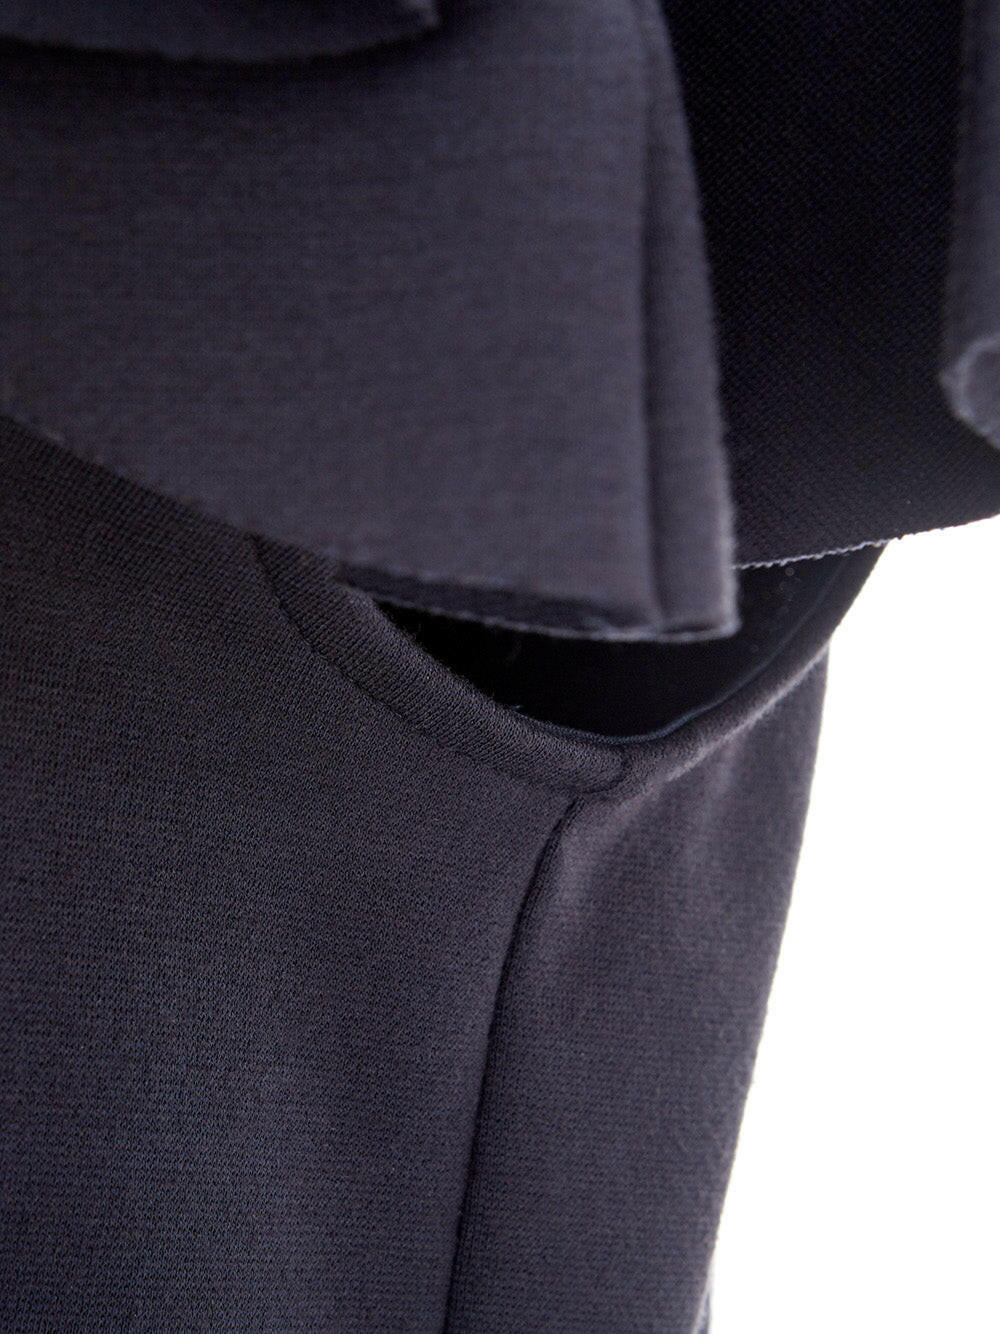 Lardini Blue Pencil Skirt with ruffles detail - GENUINE AUTHENTIC BRAND LLC  